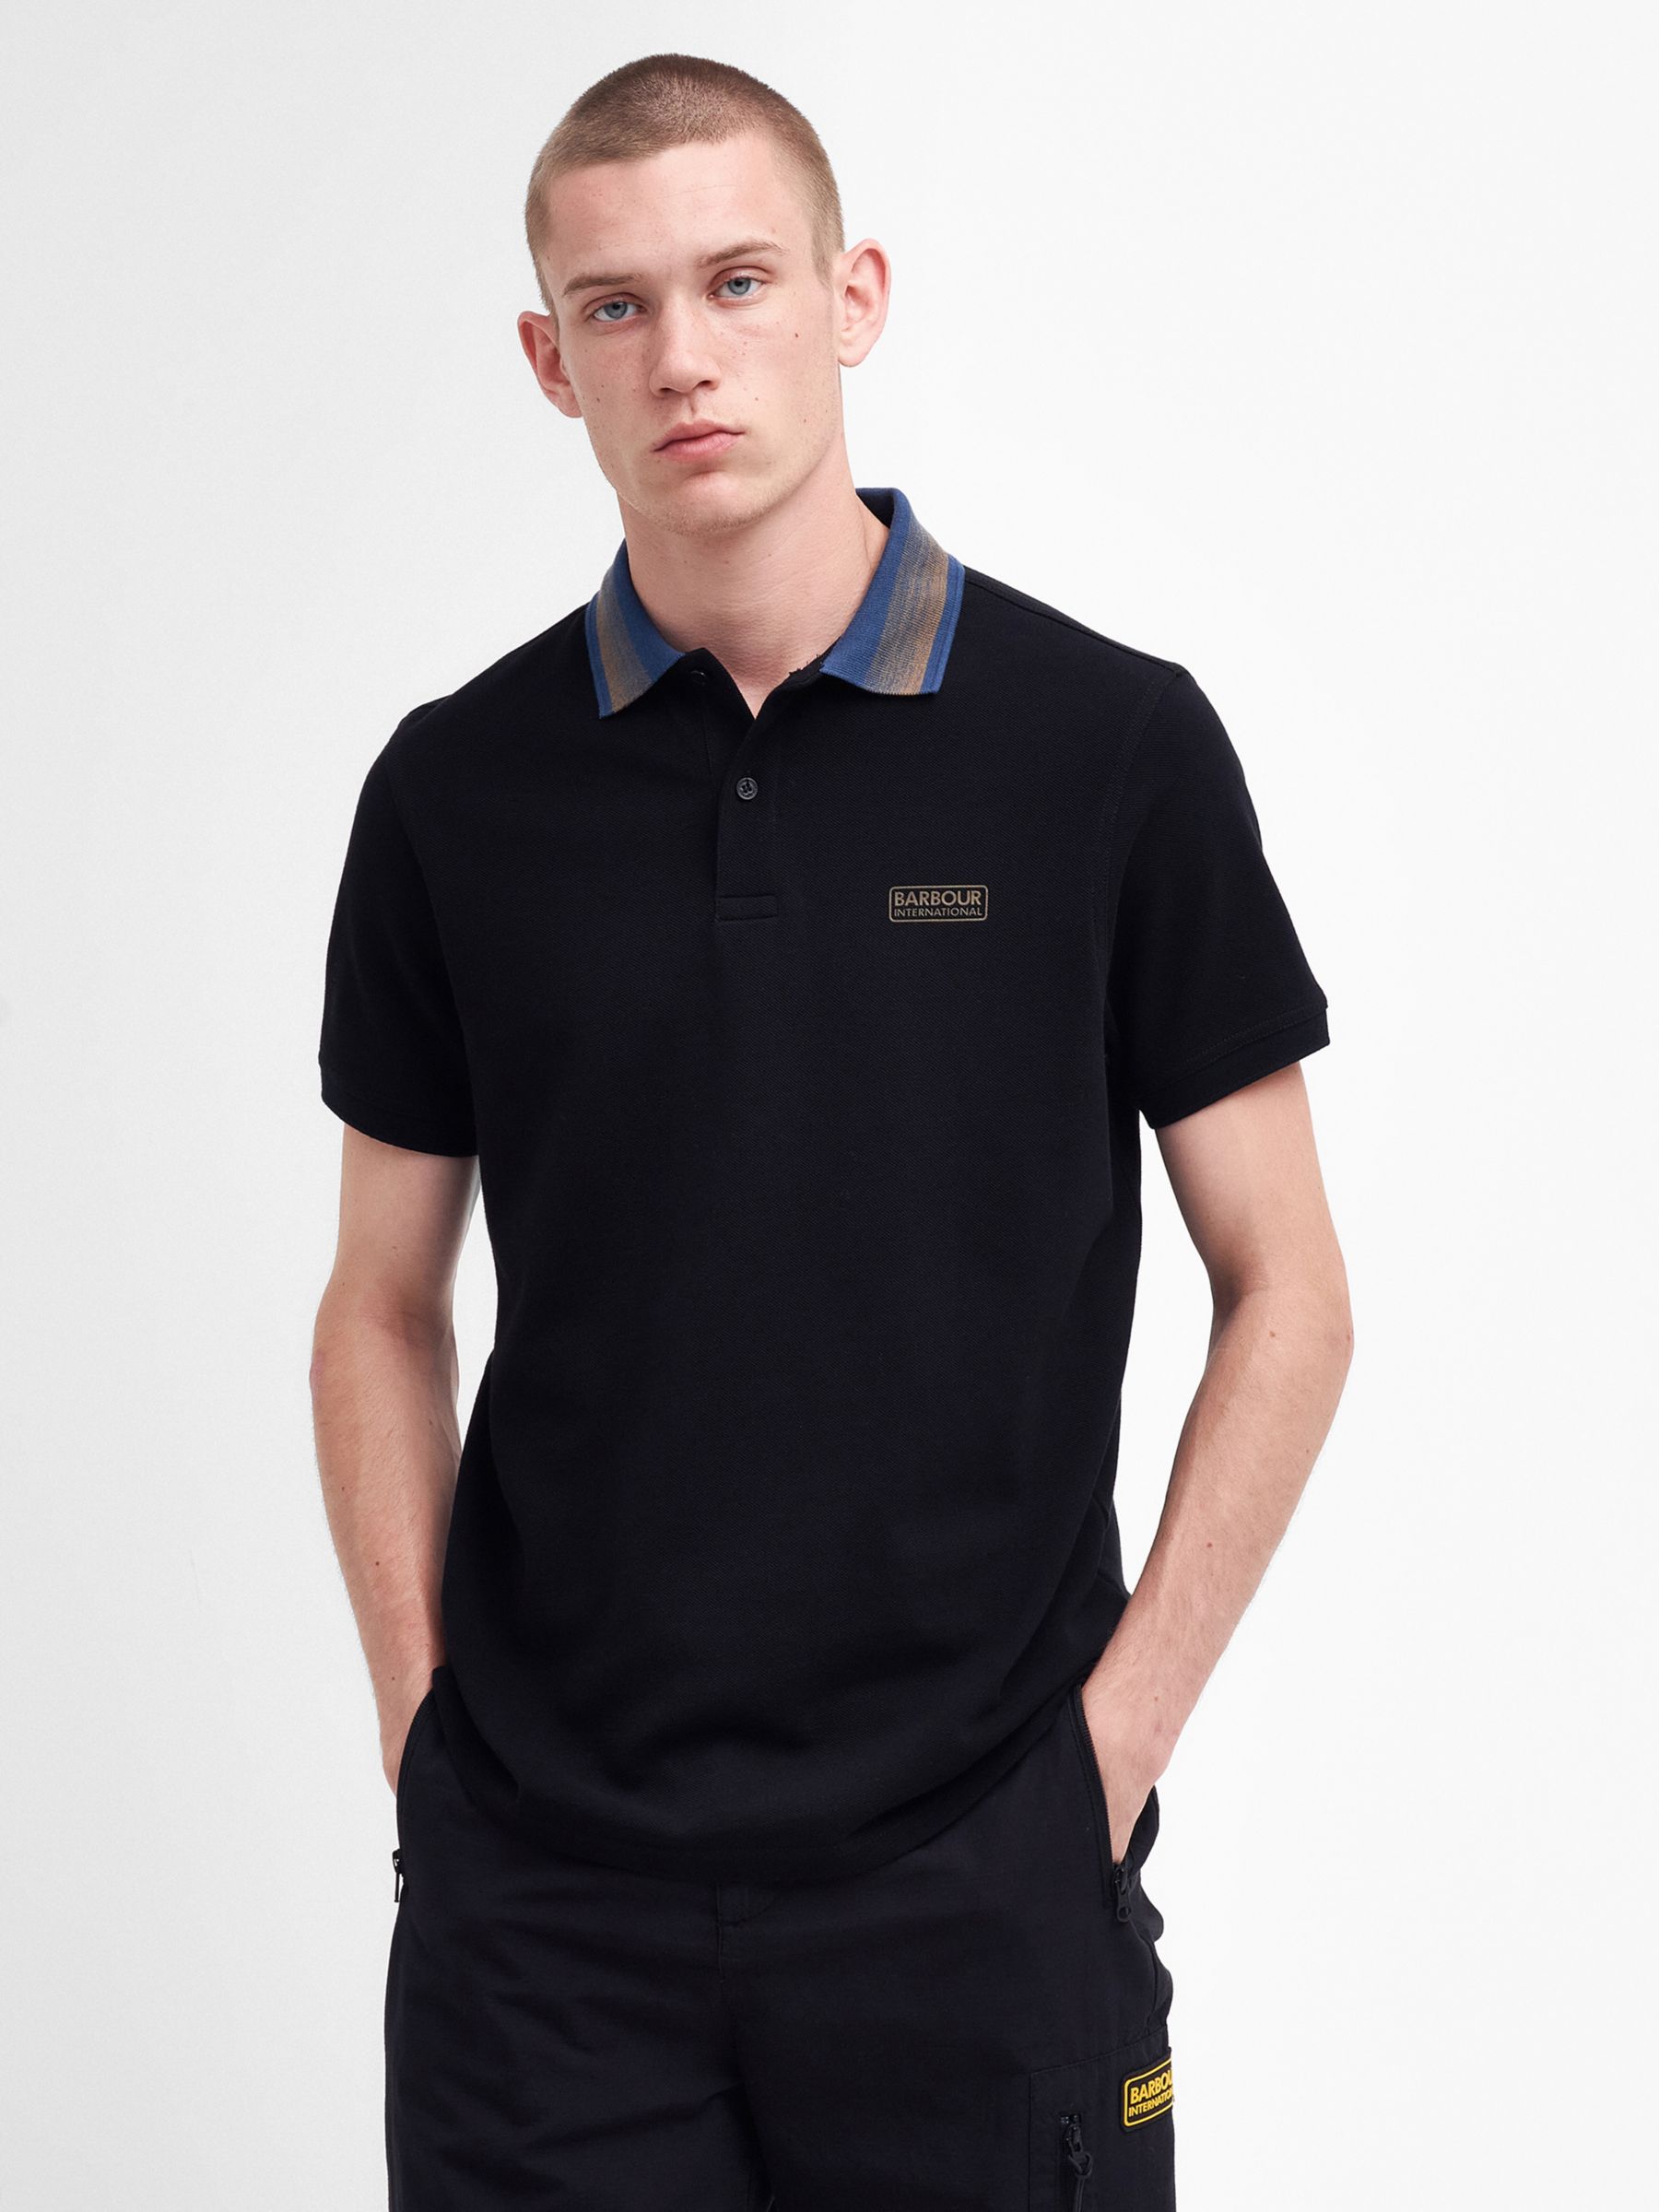 Barbour International Gourley Polo Shirt, Black at John Lewis & Partners